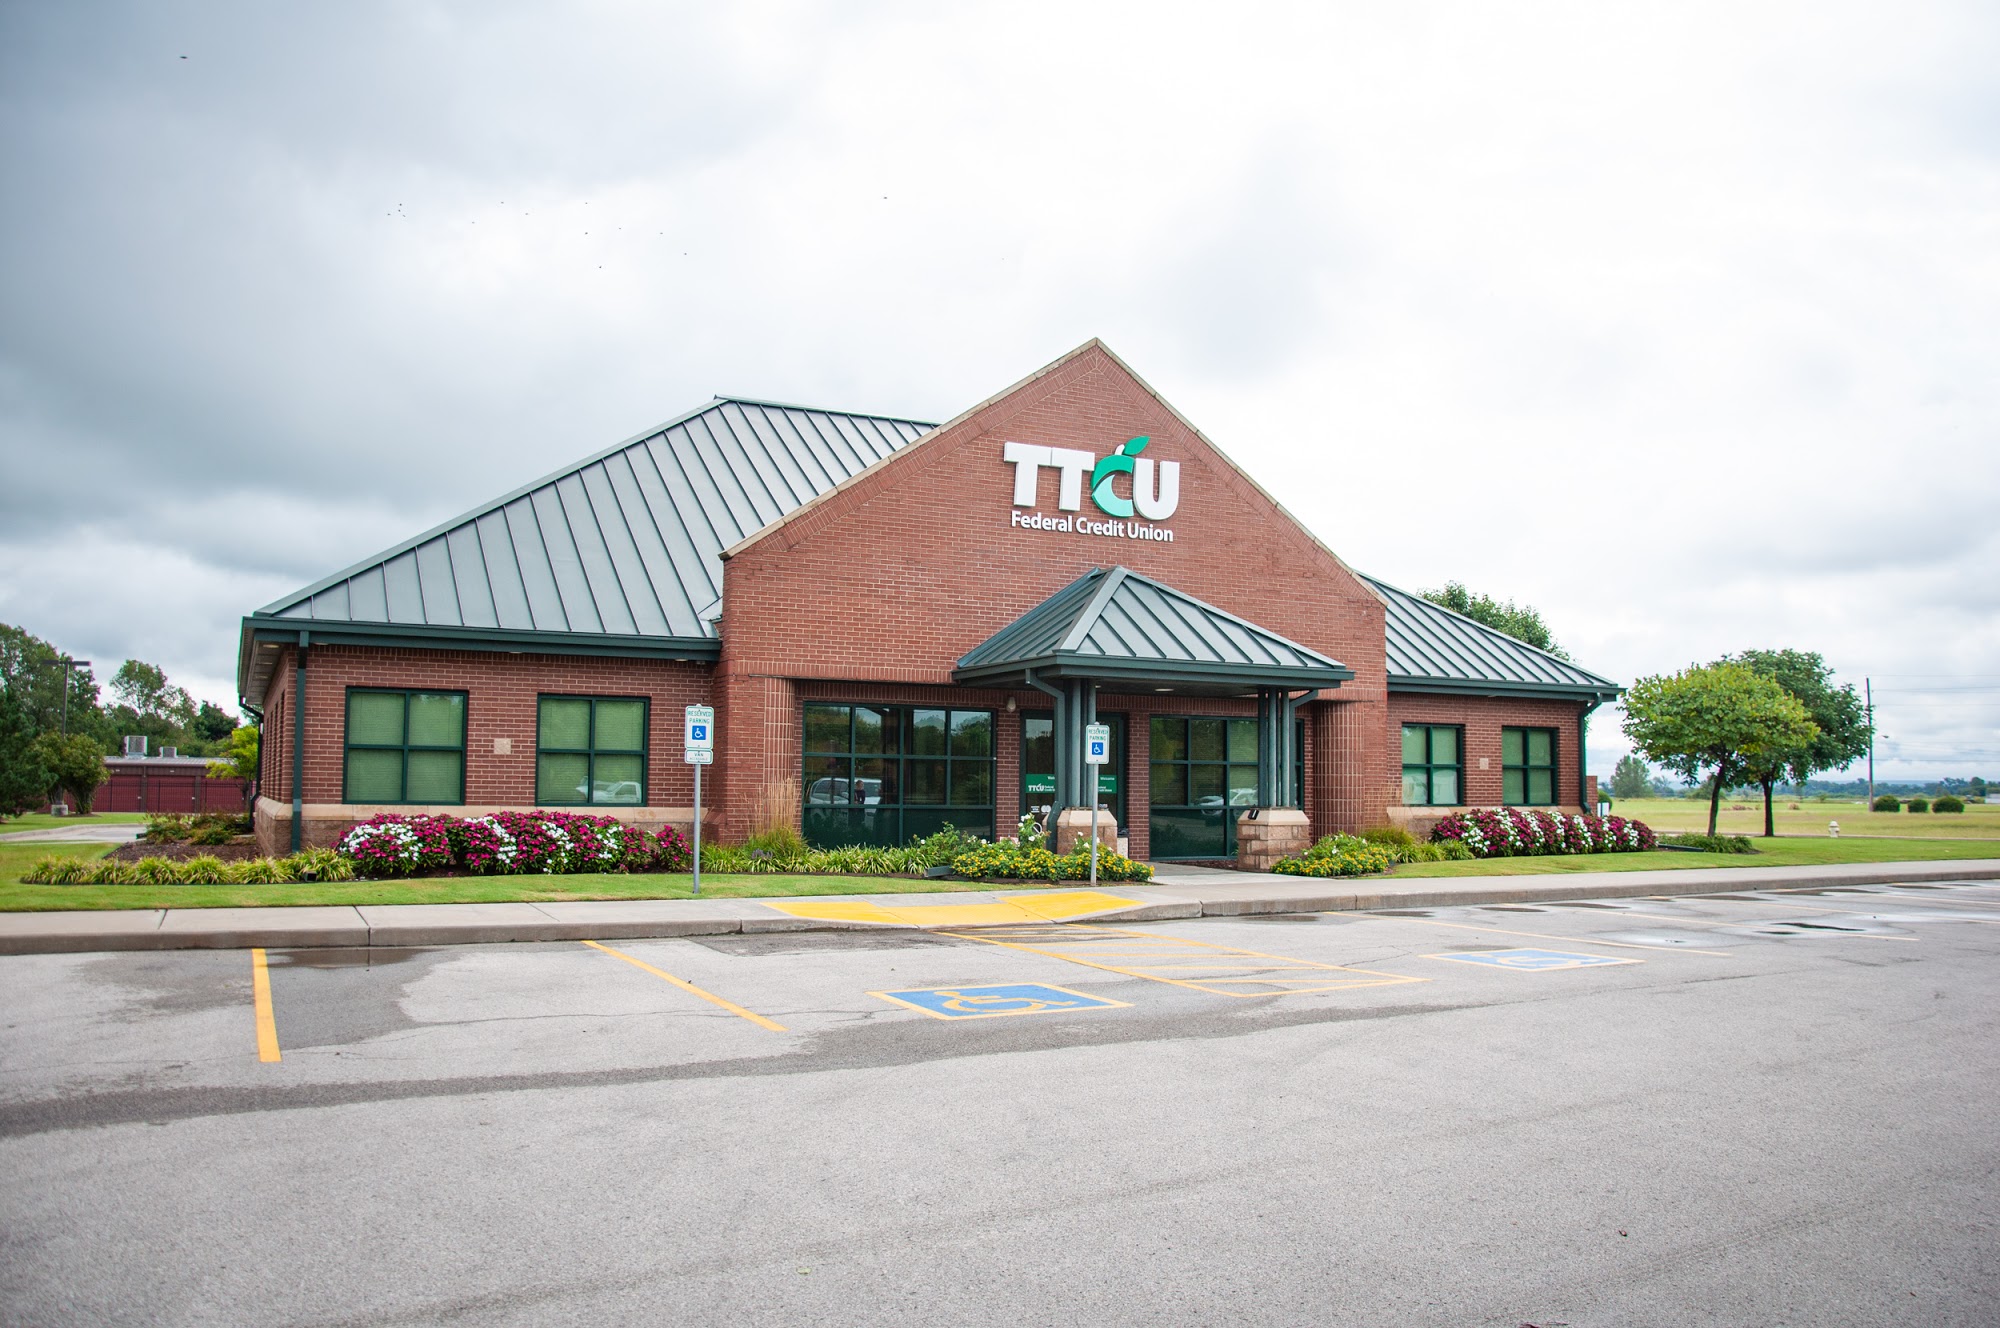 TTCU Federal Credit Union